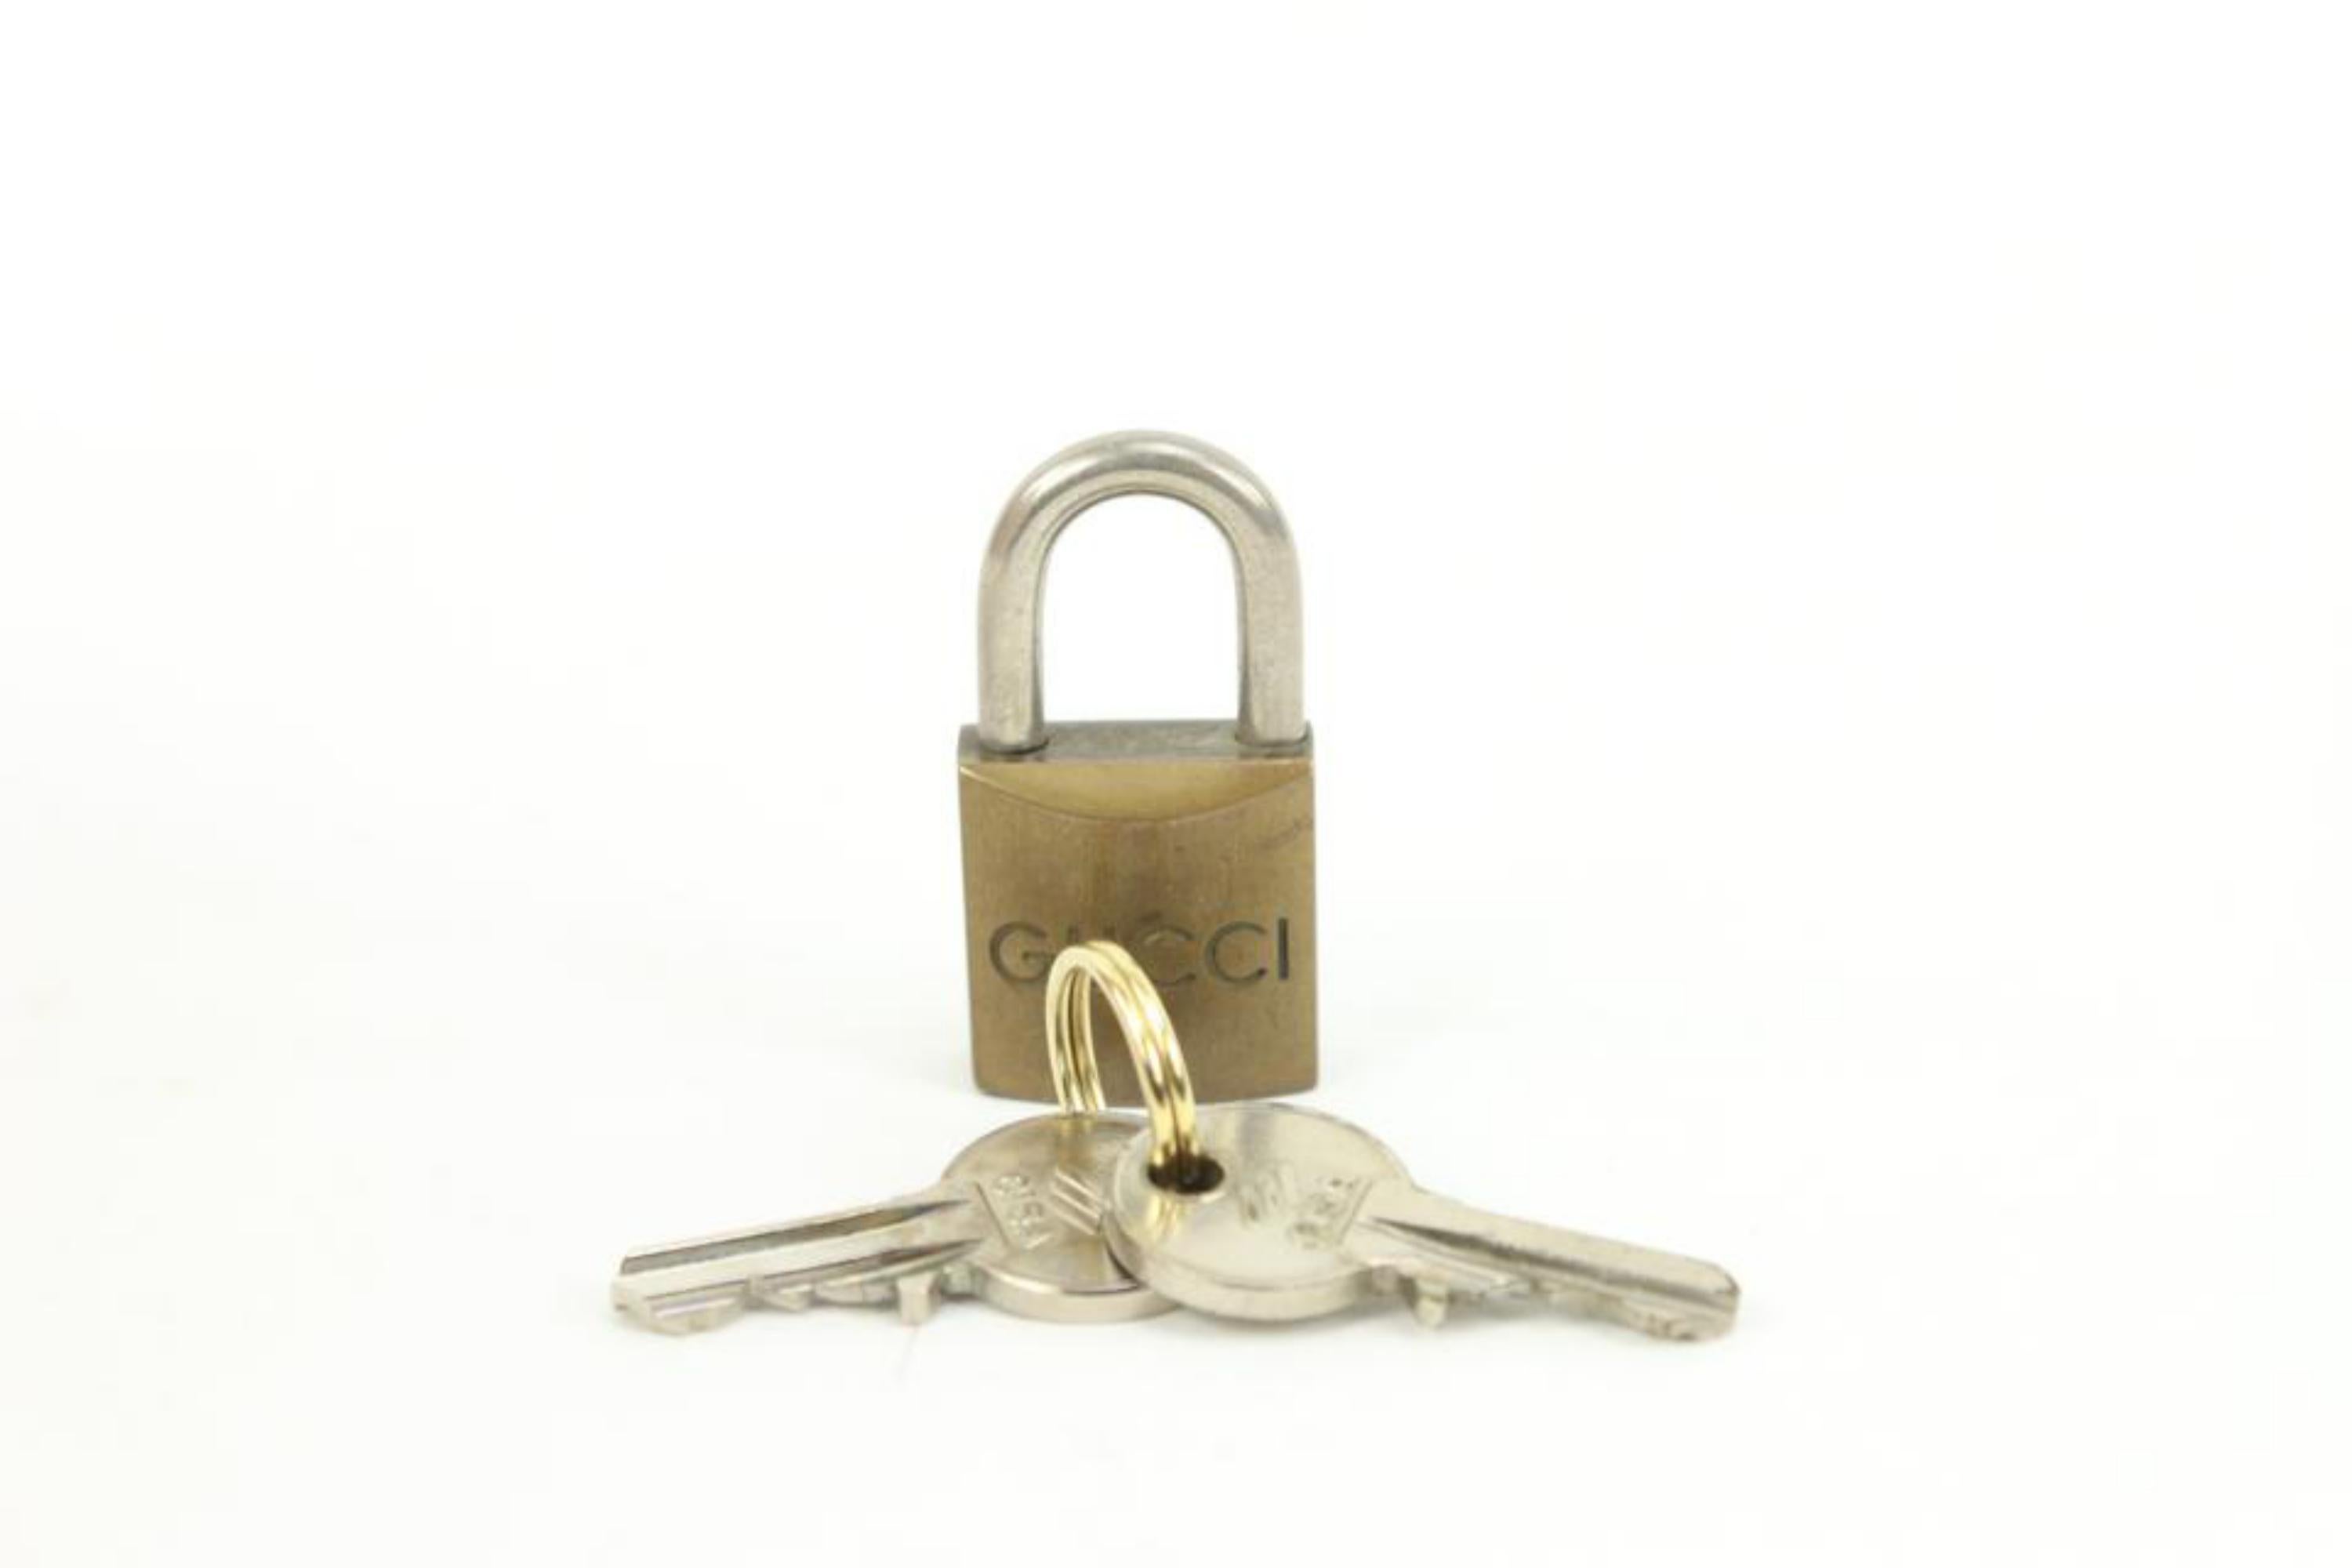 Gucci Vintage Brass Lock and Key Set Cadena Padlock Bag Charm 17g34s 4